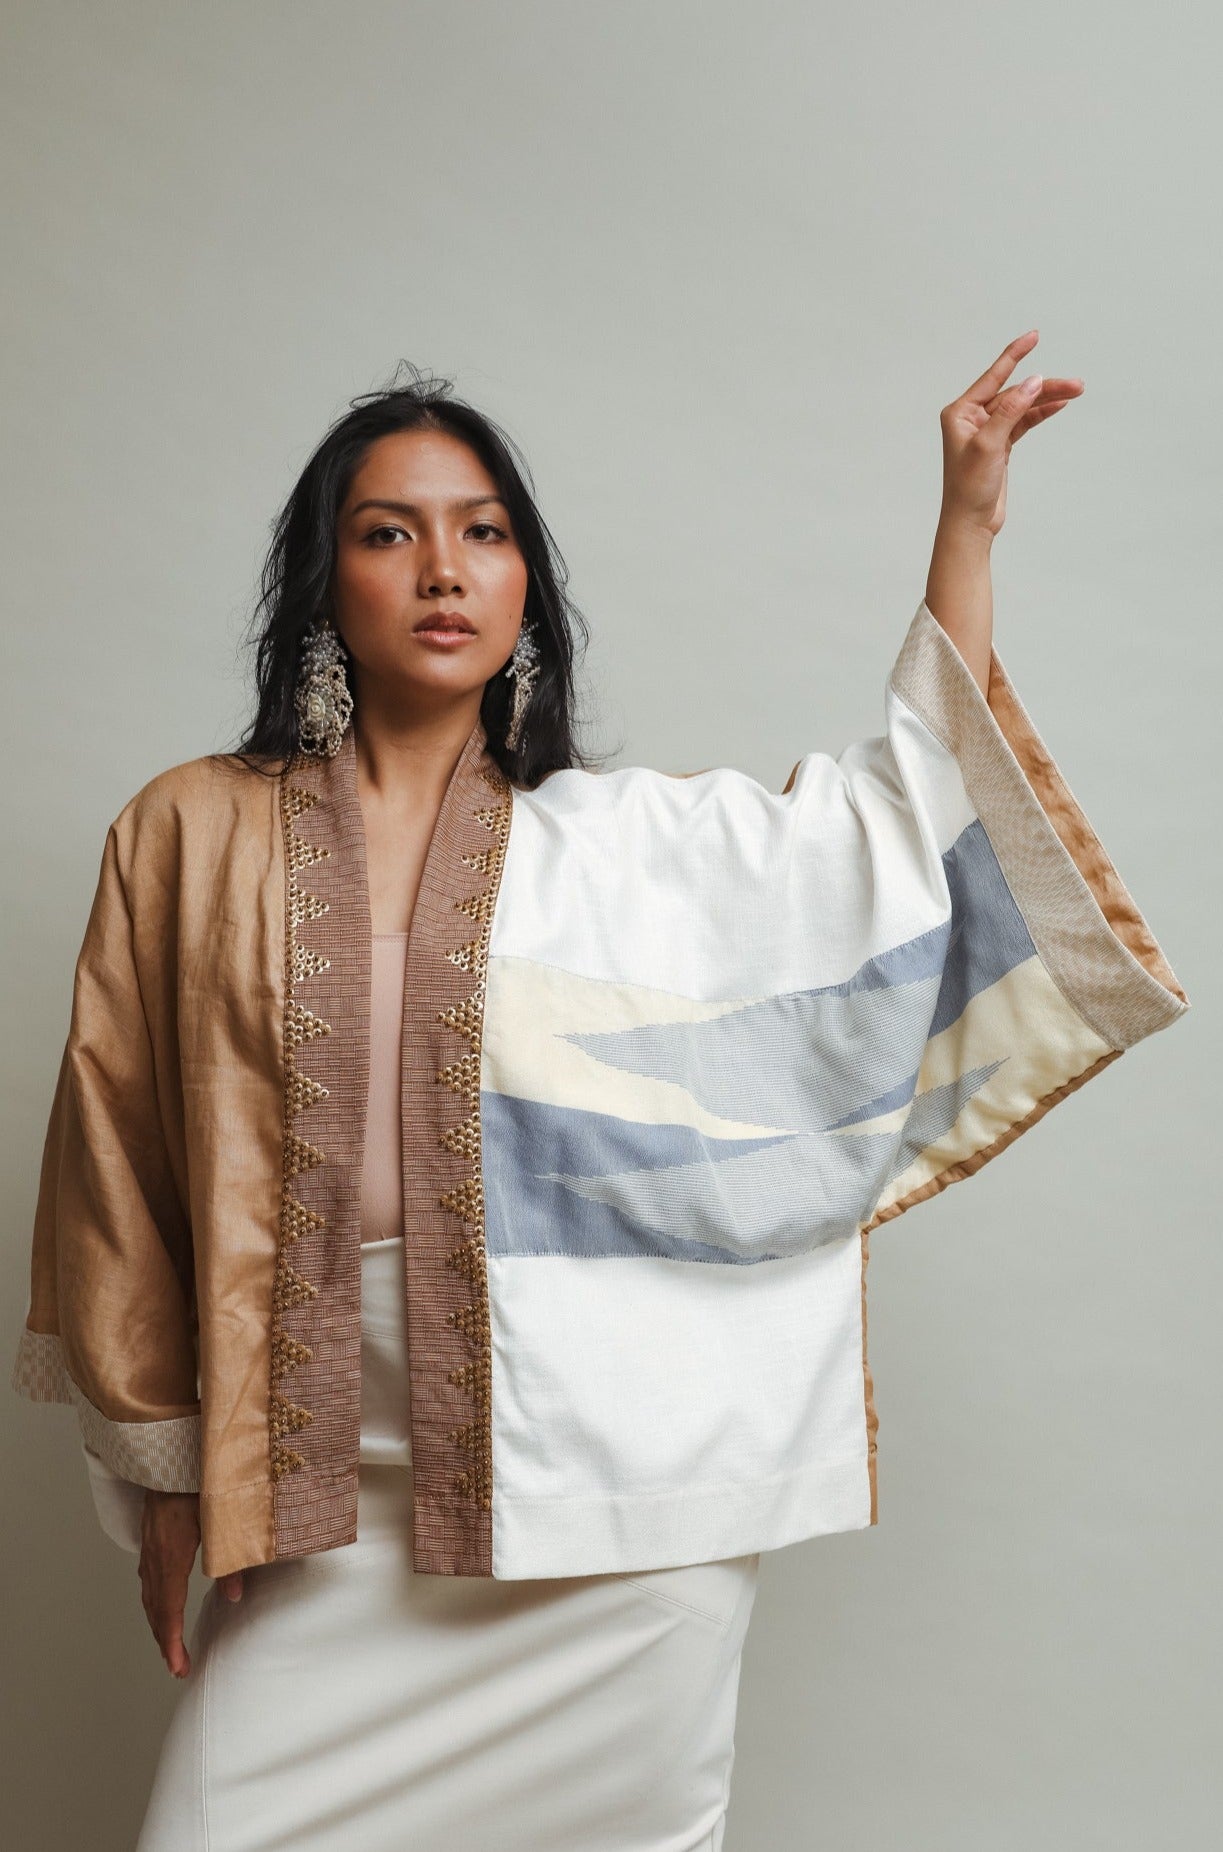 Gabing Mapayapa Kimono Poncho in Royal Earth Tones